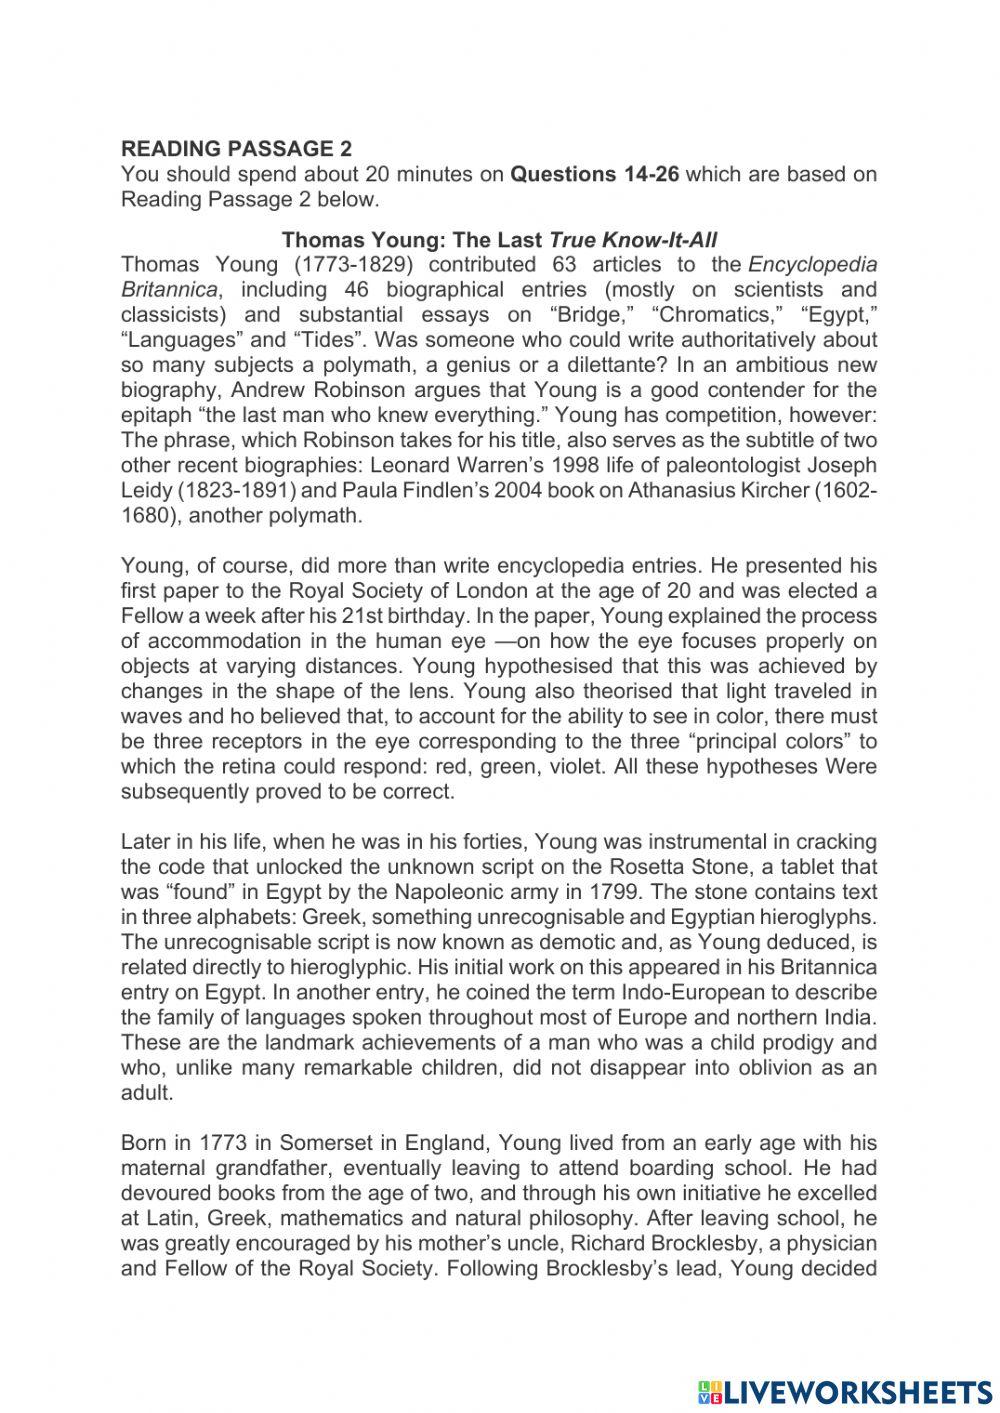 Reading Passage 2: Thomas Young